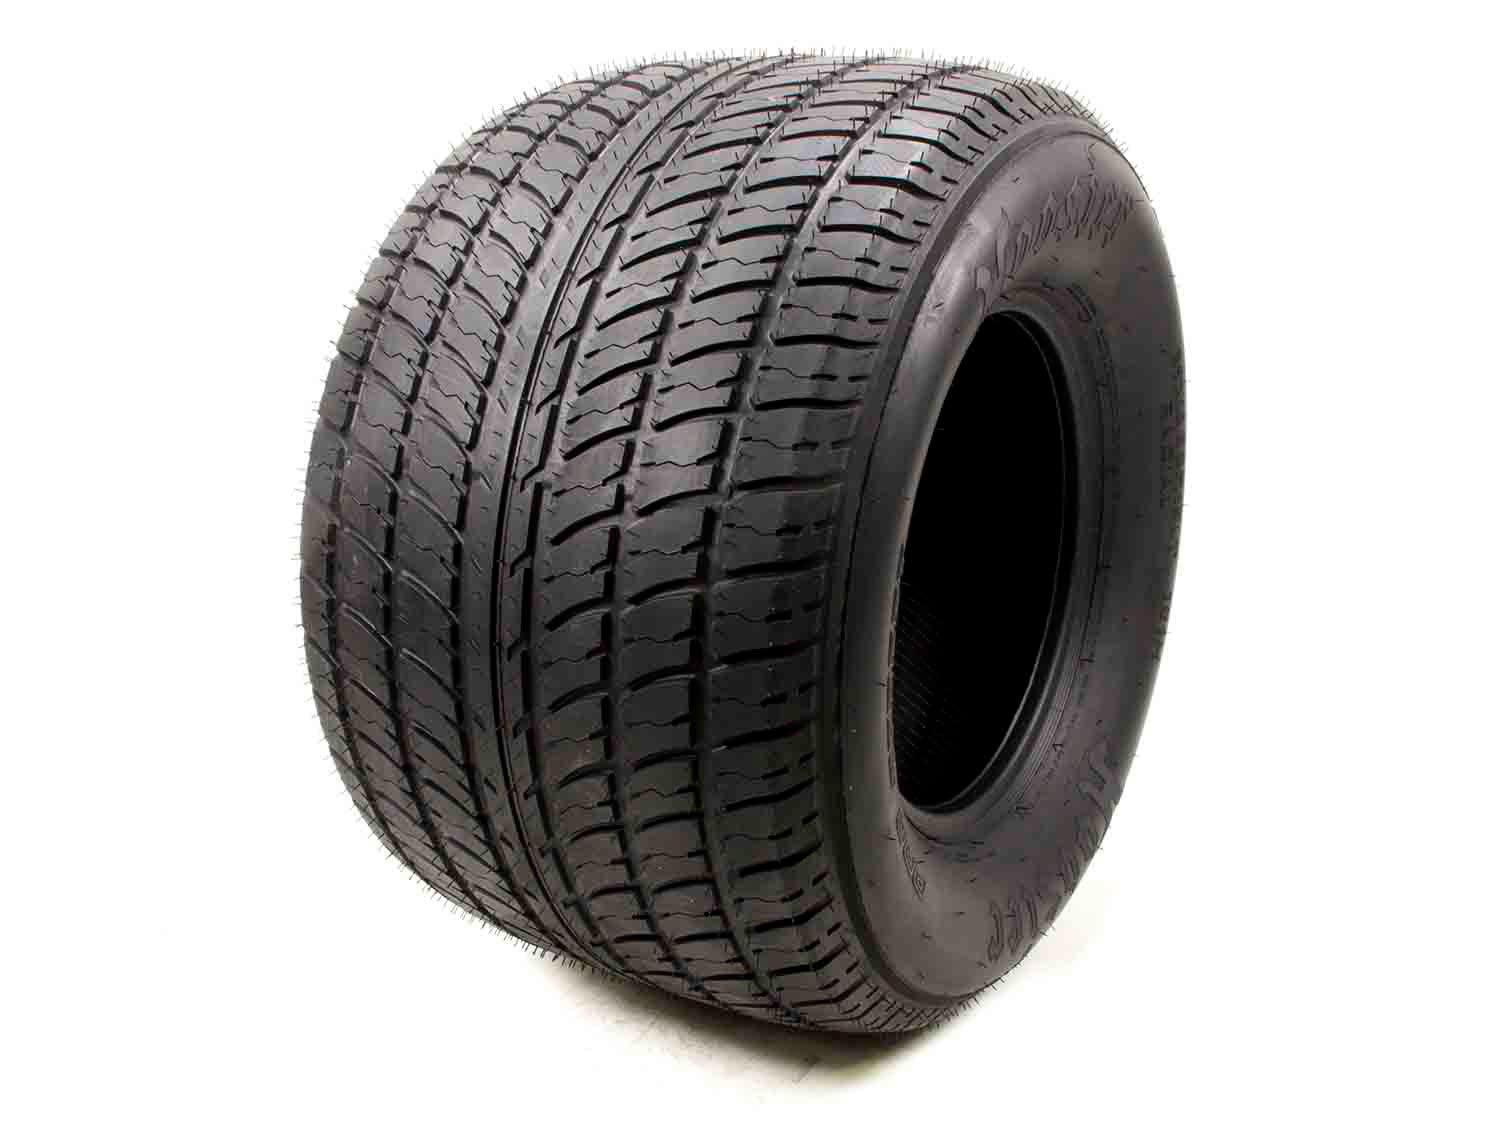 31/16.5R-15LT Pro Street Radial Tire - Burlile Performance Products